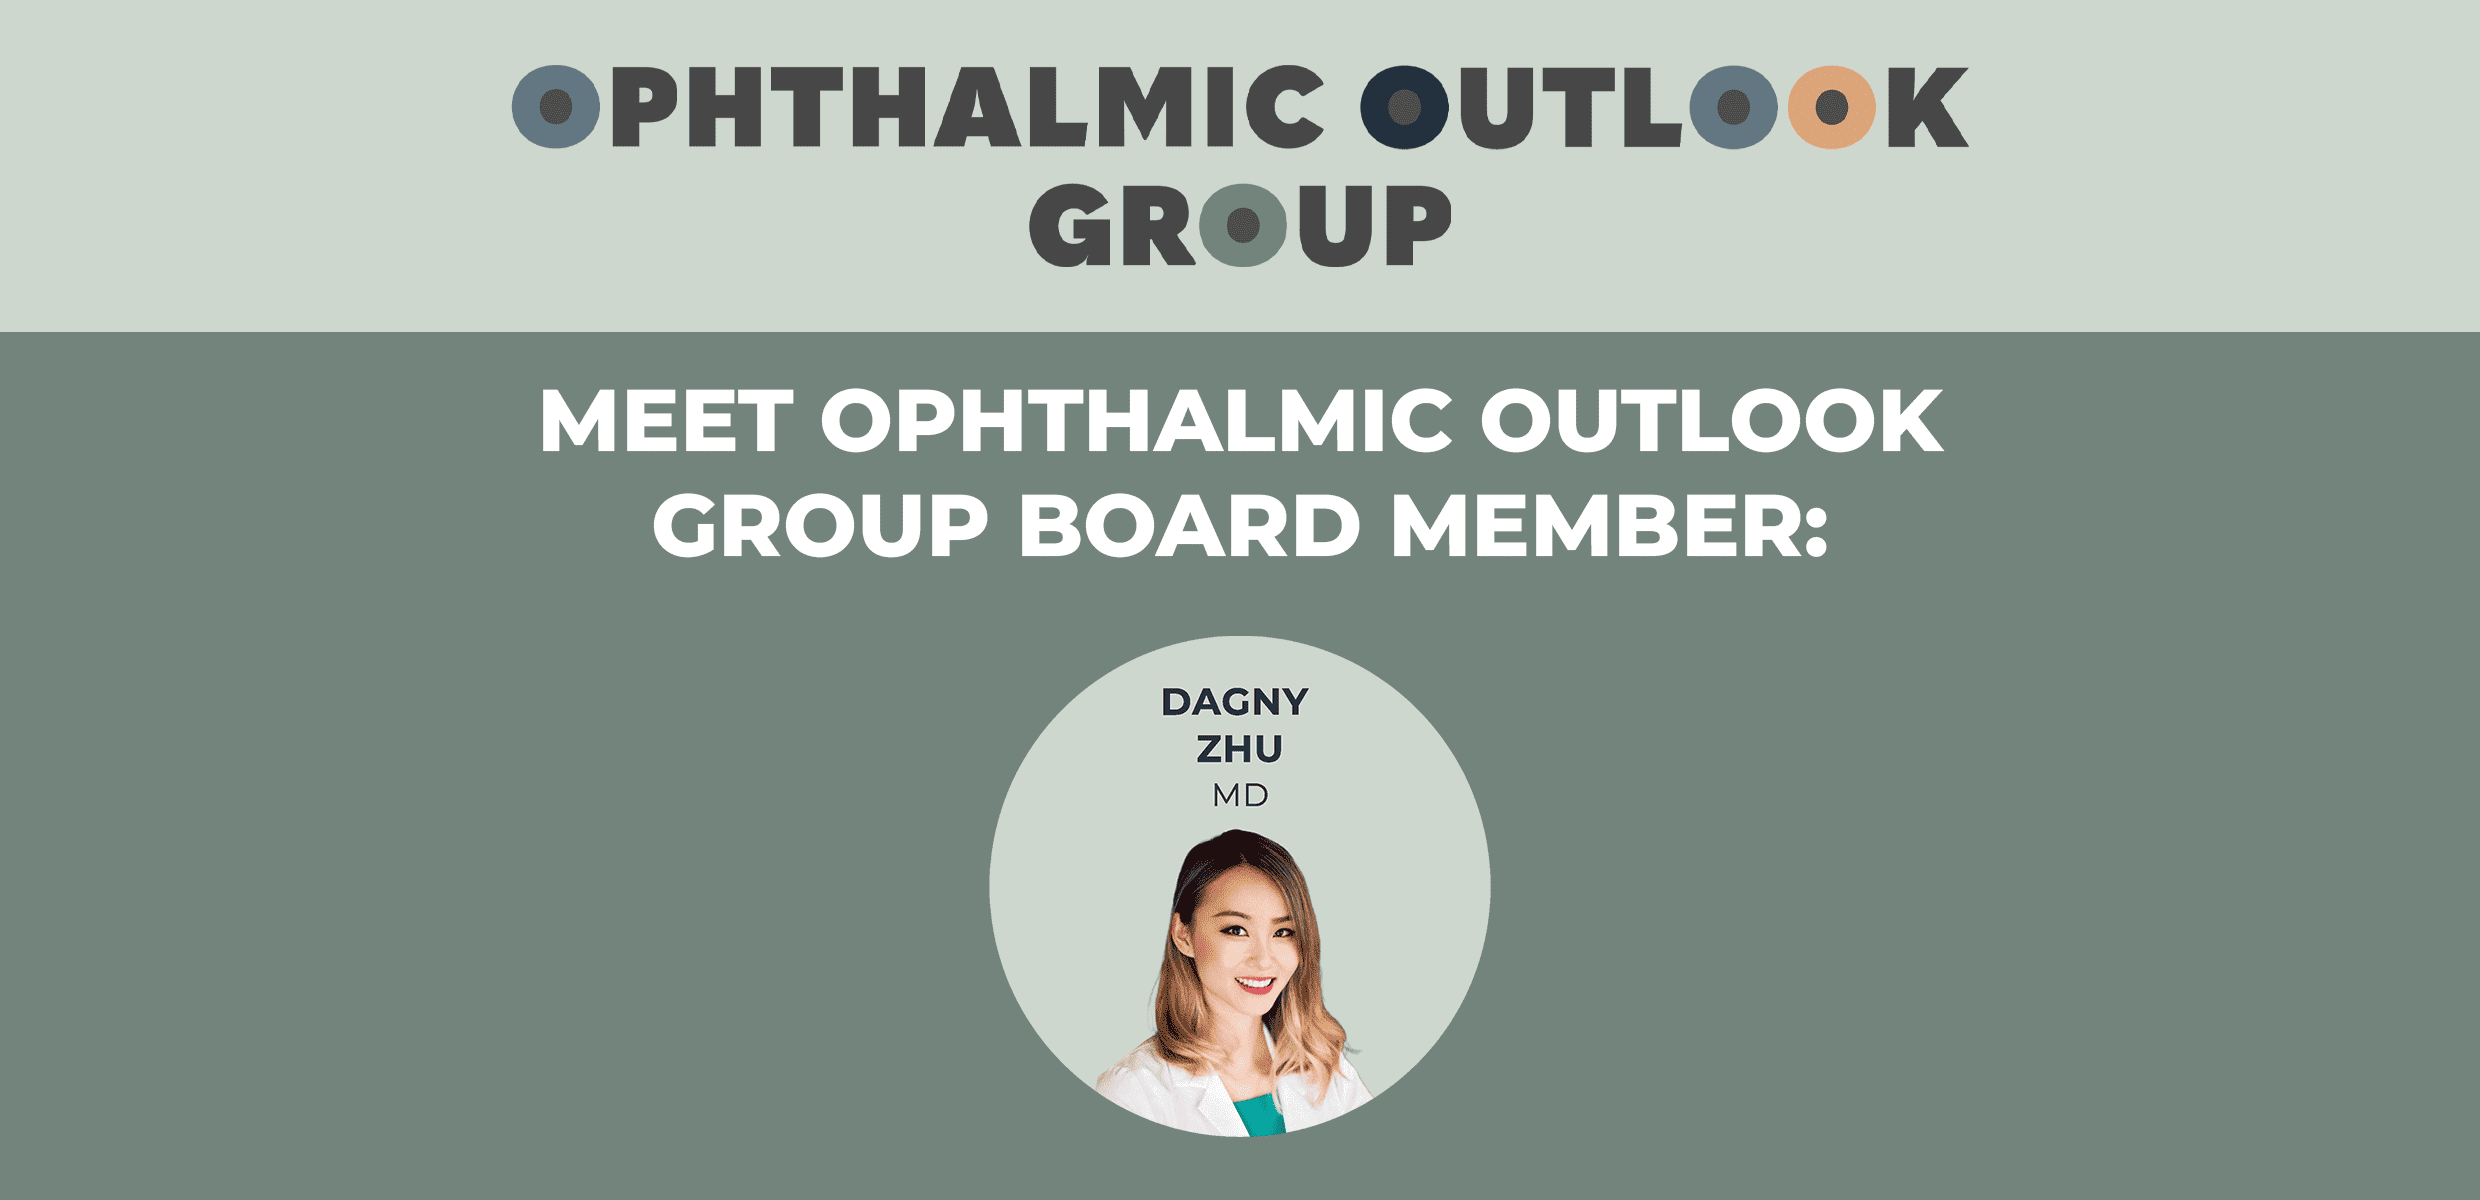 Meet Ophthalmic Outlook Group Board Member: Dagny Zhu, MD